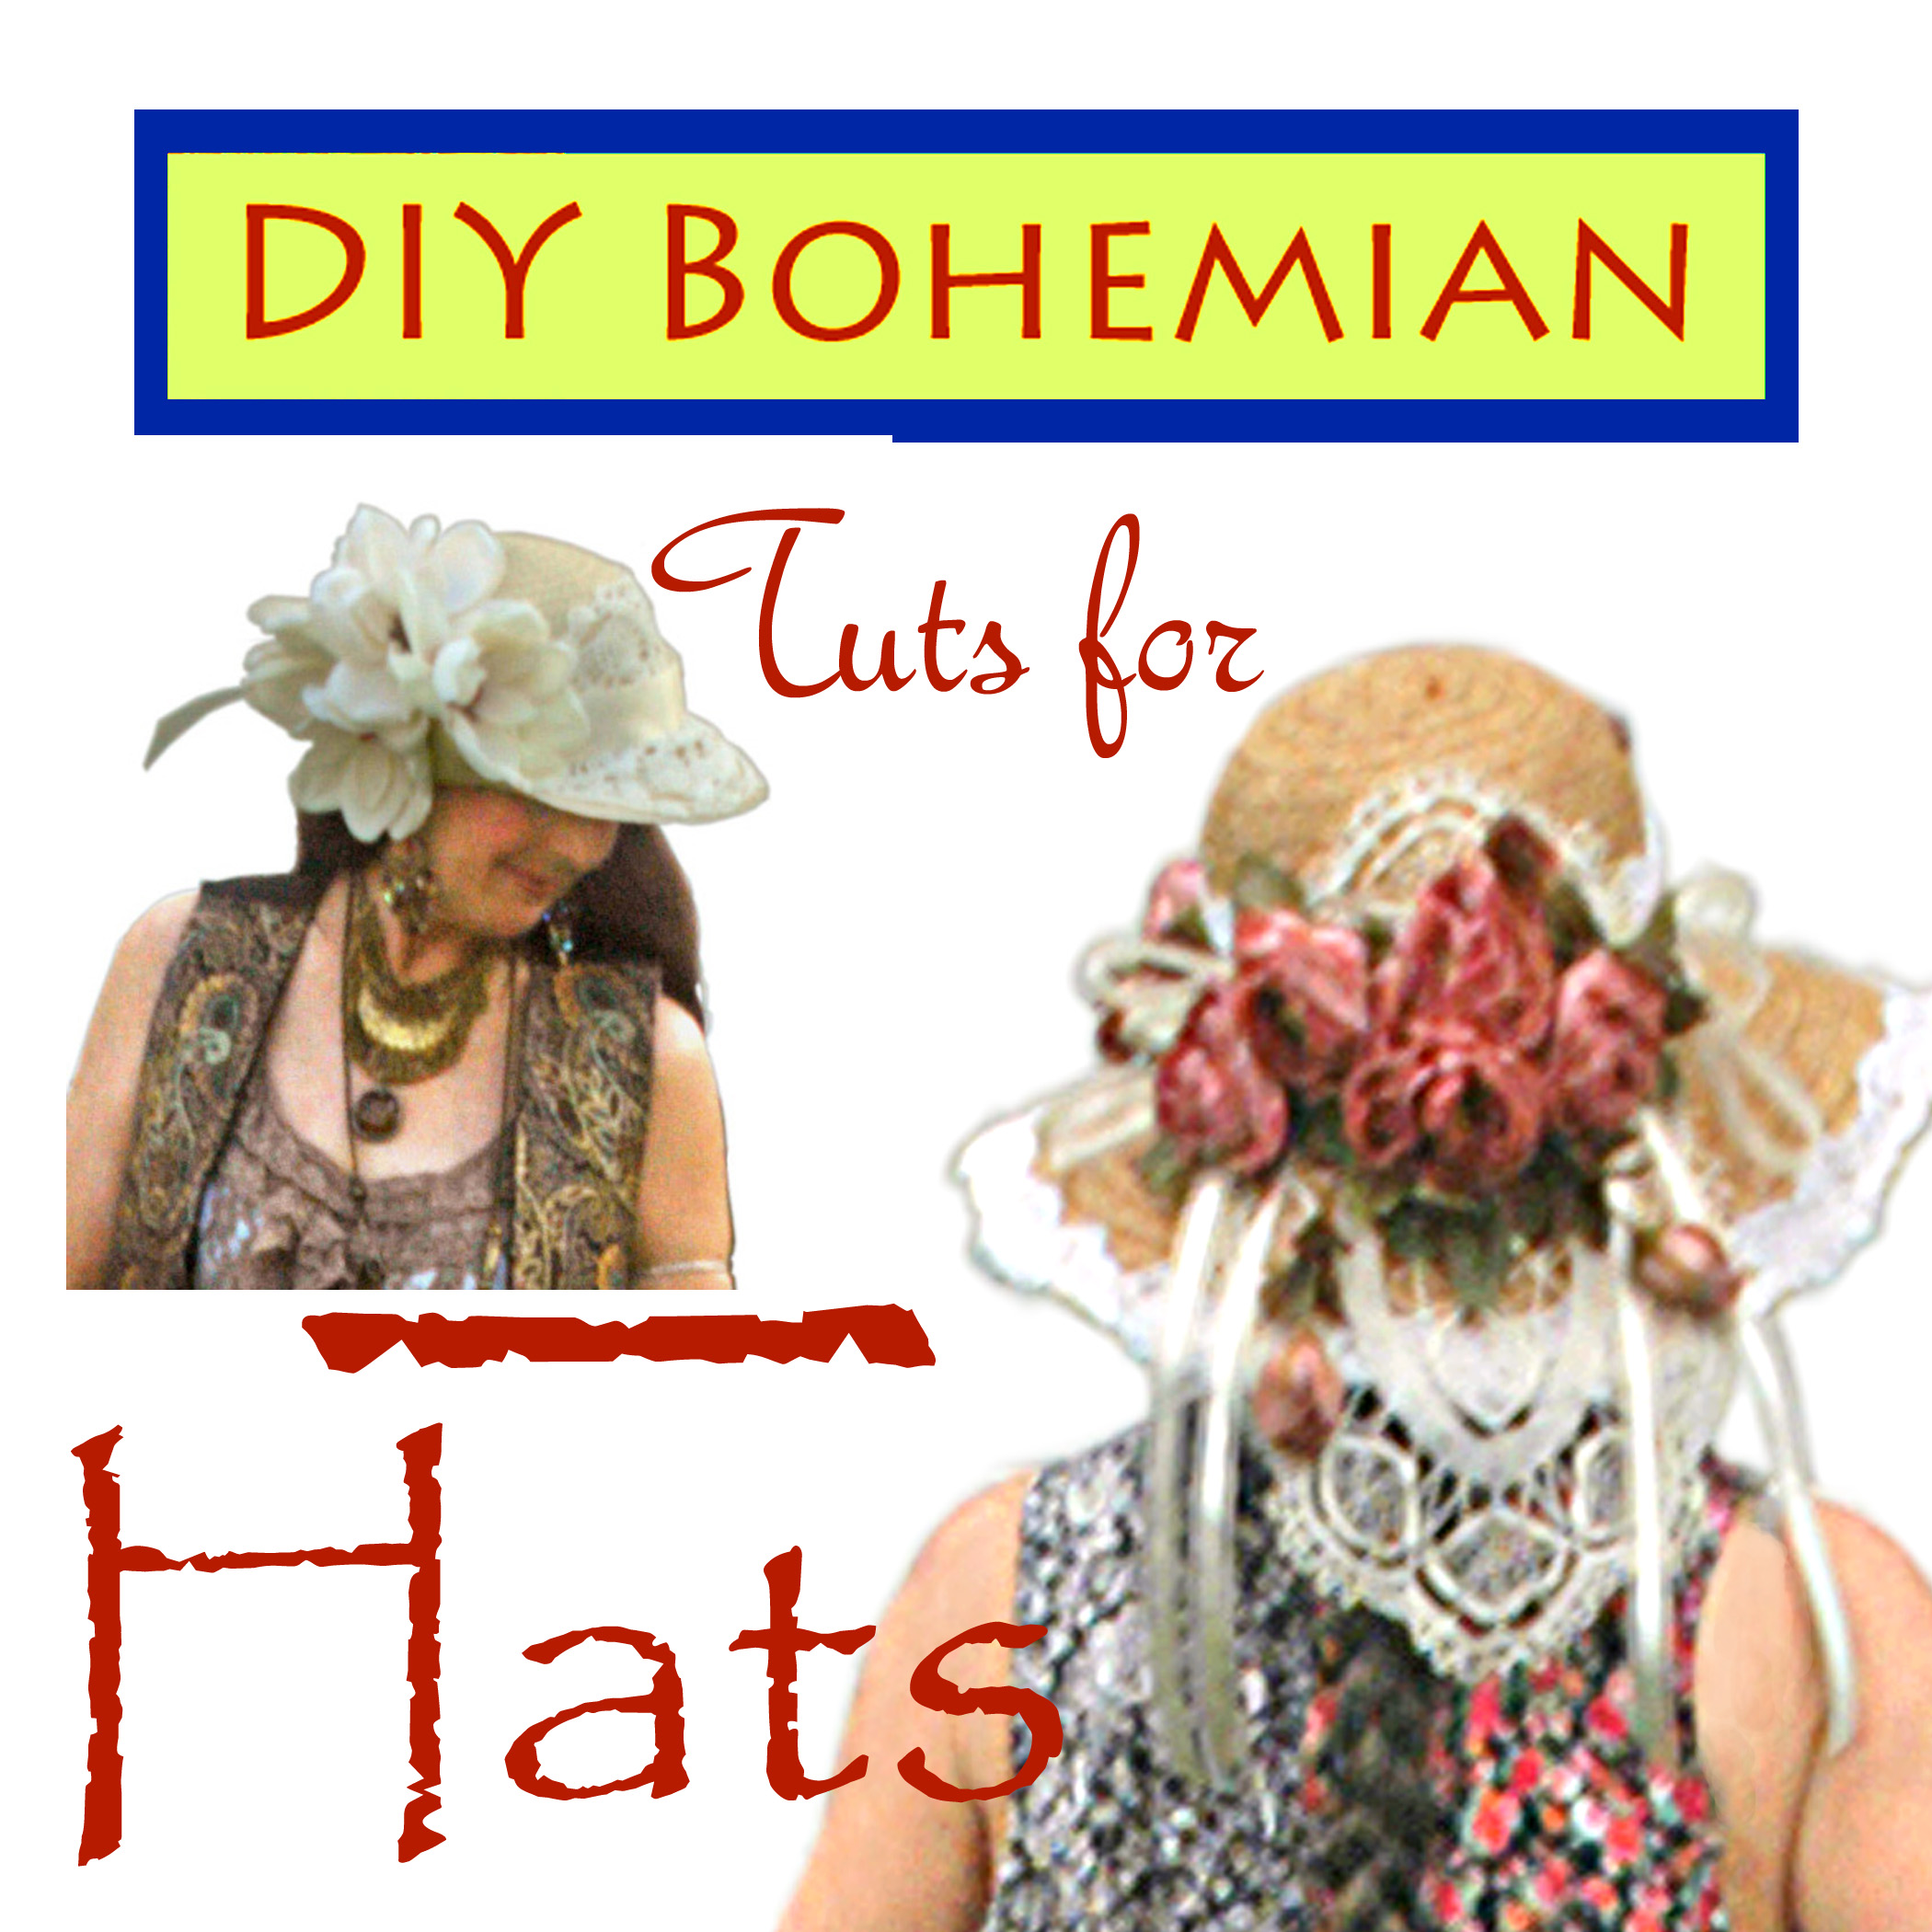 More tutorials for hats!